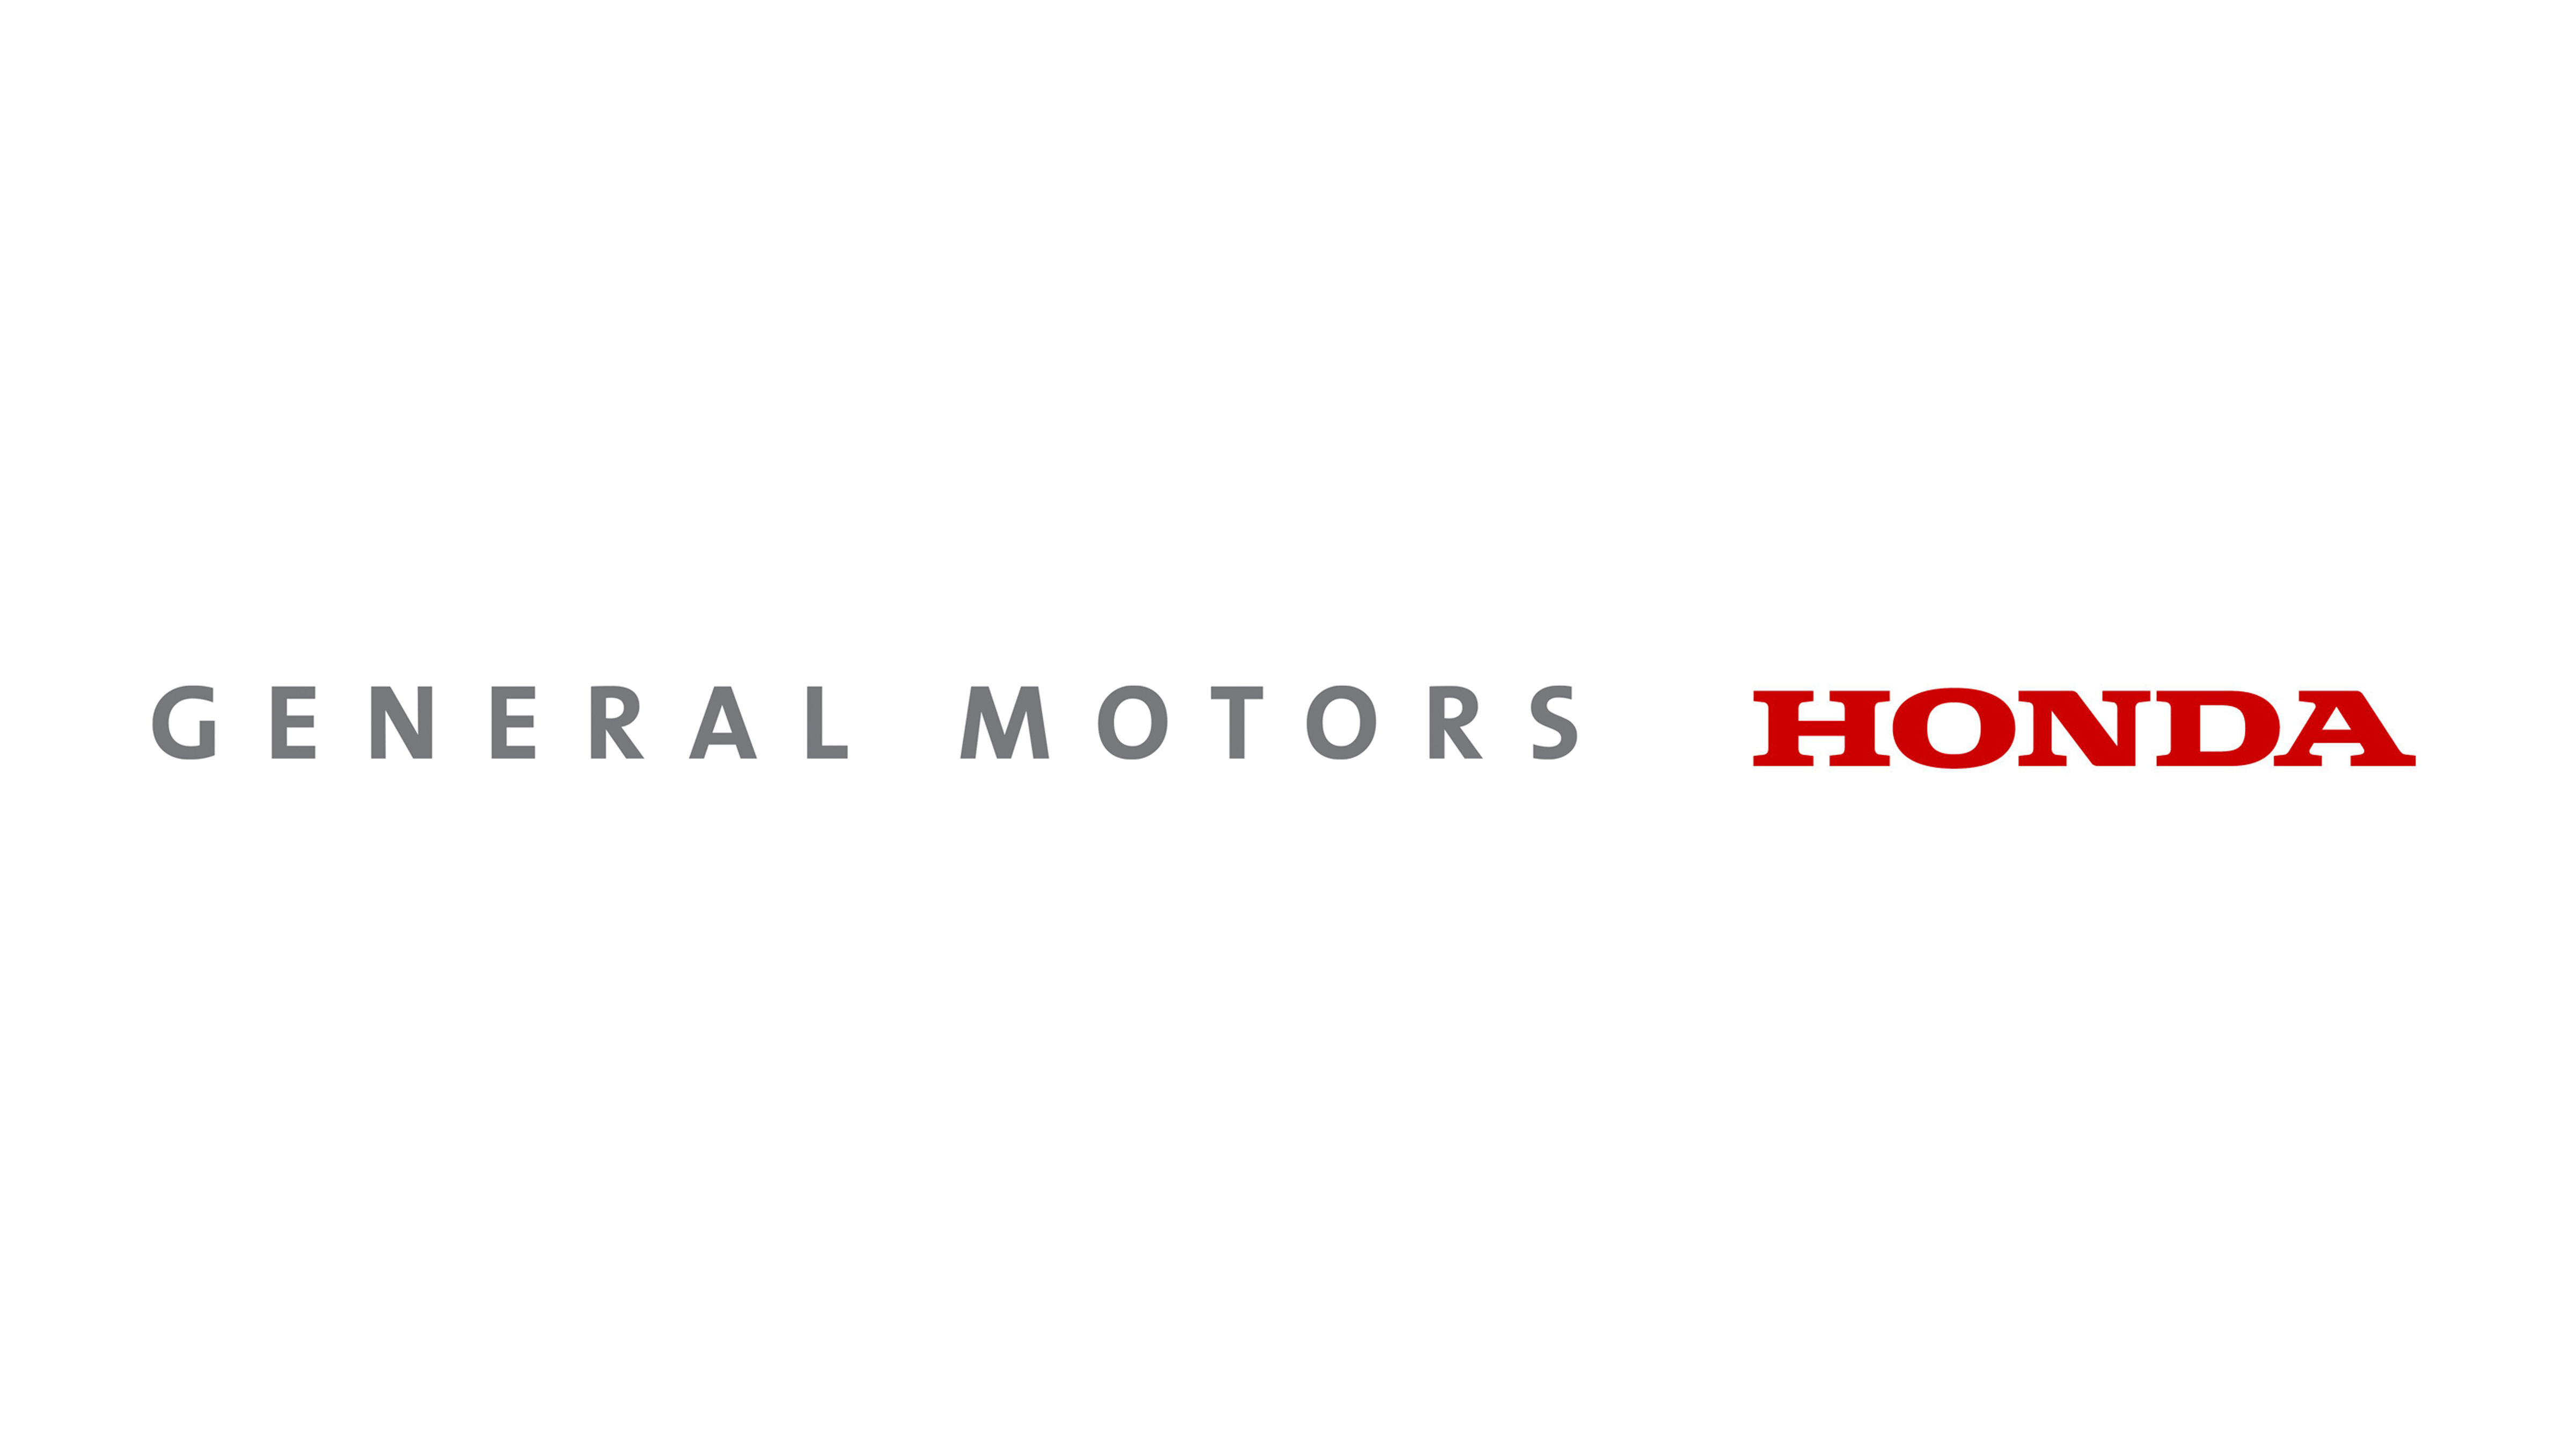 Partenariat entre GM et Honda